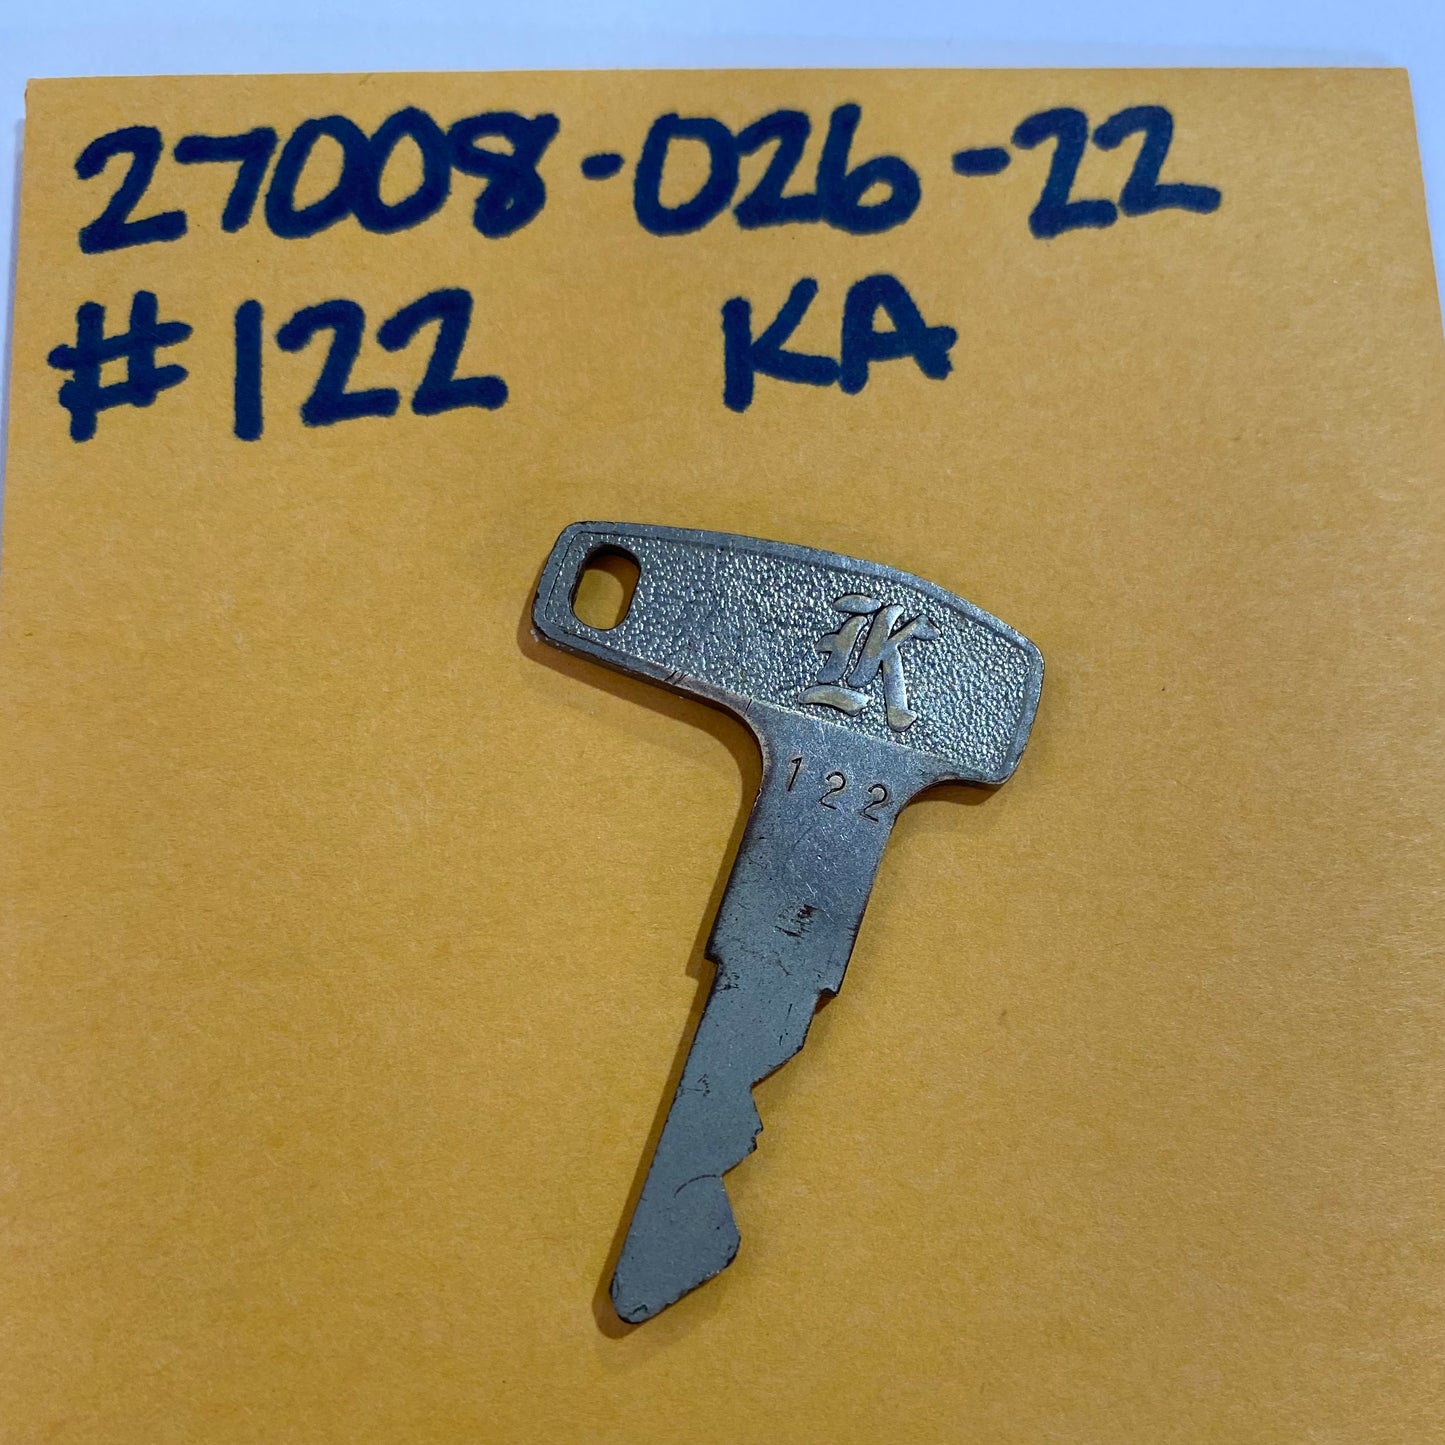 Kawasaki Key Set #122 27008-026-22